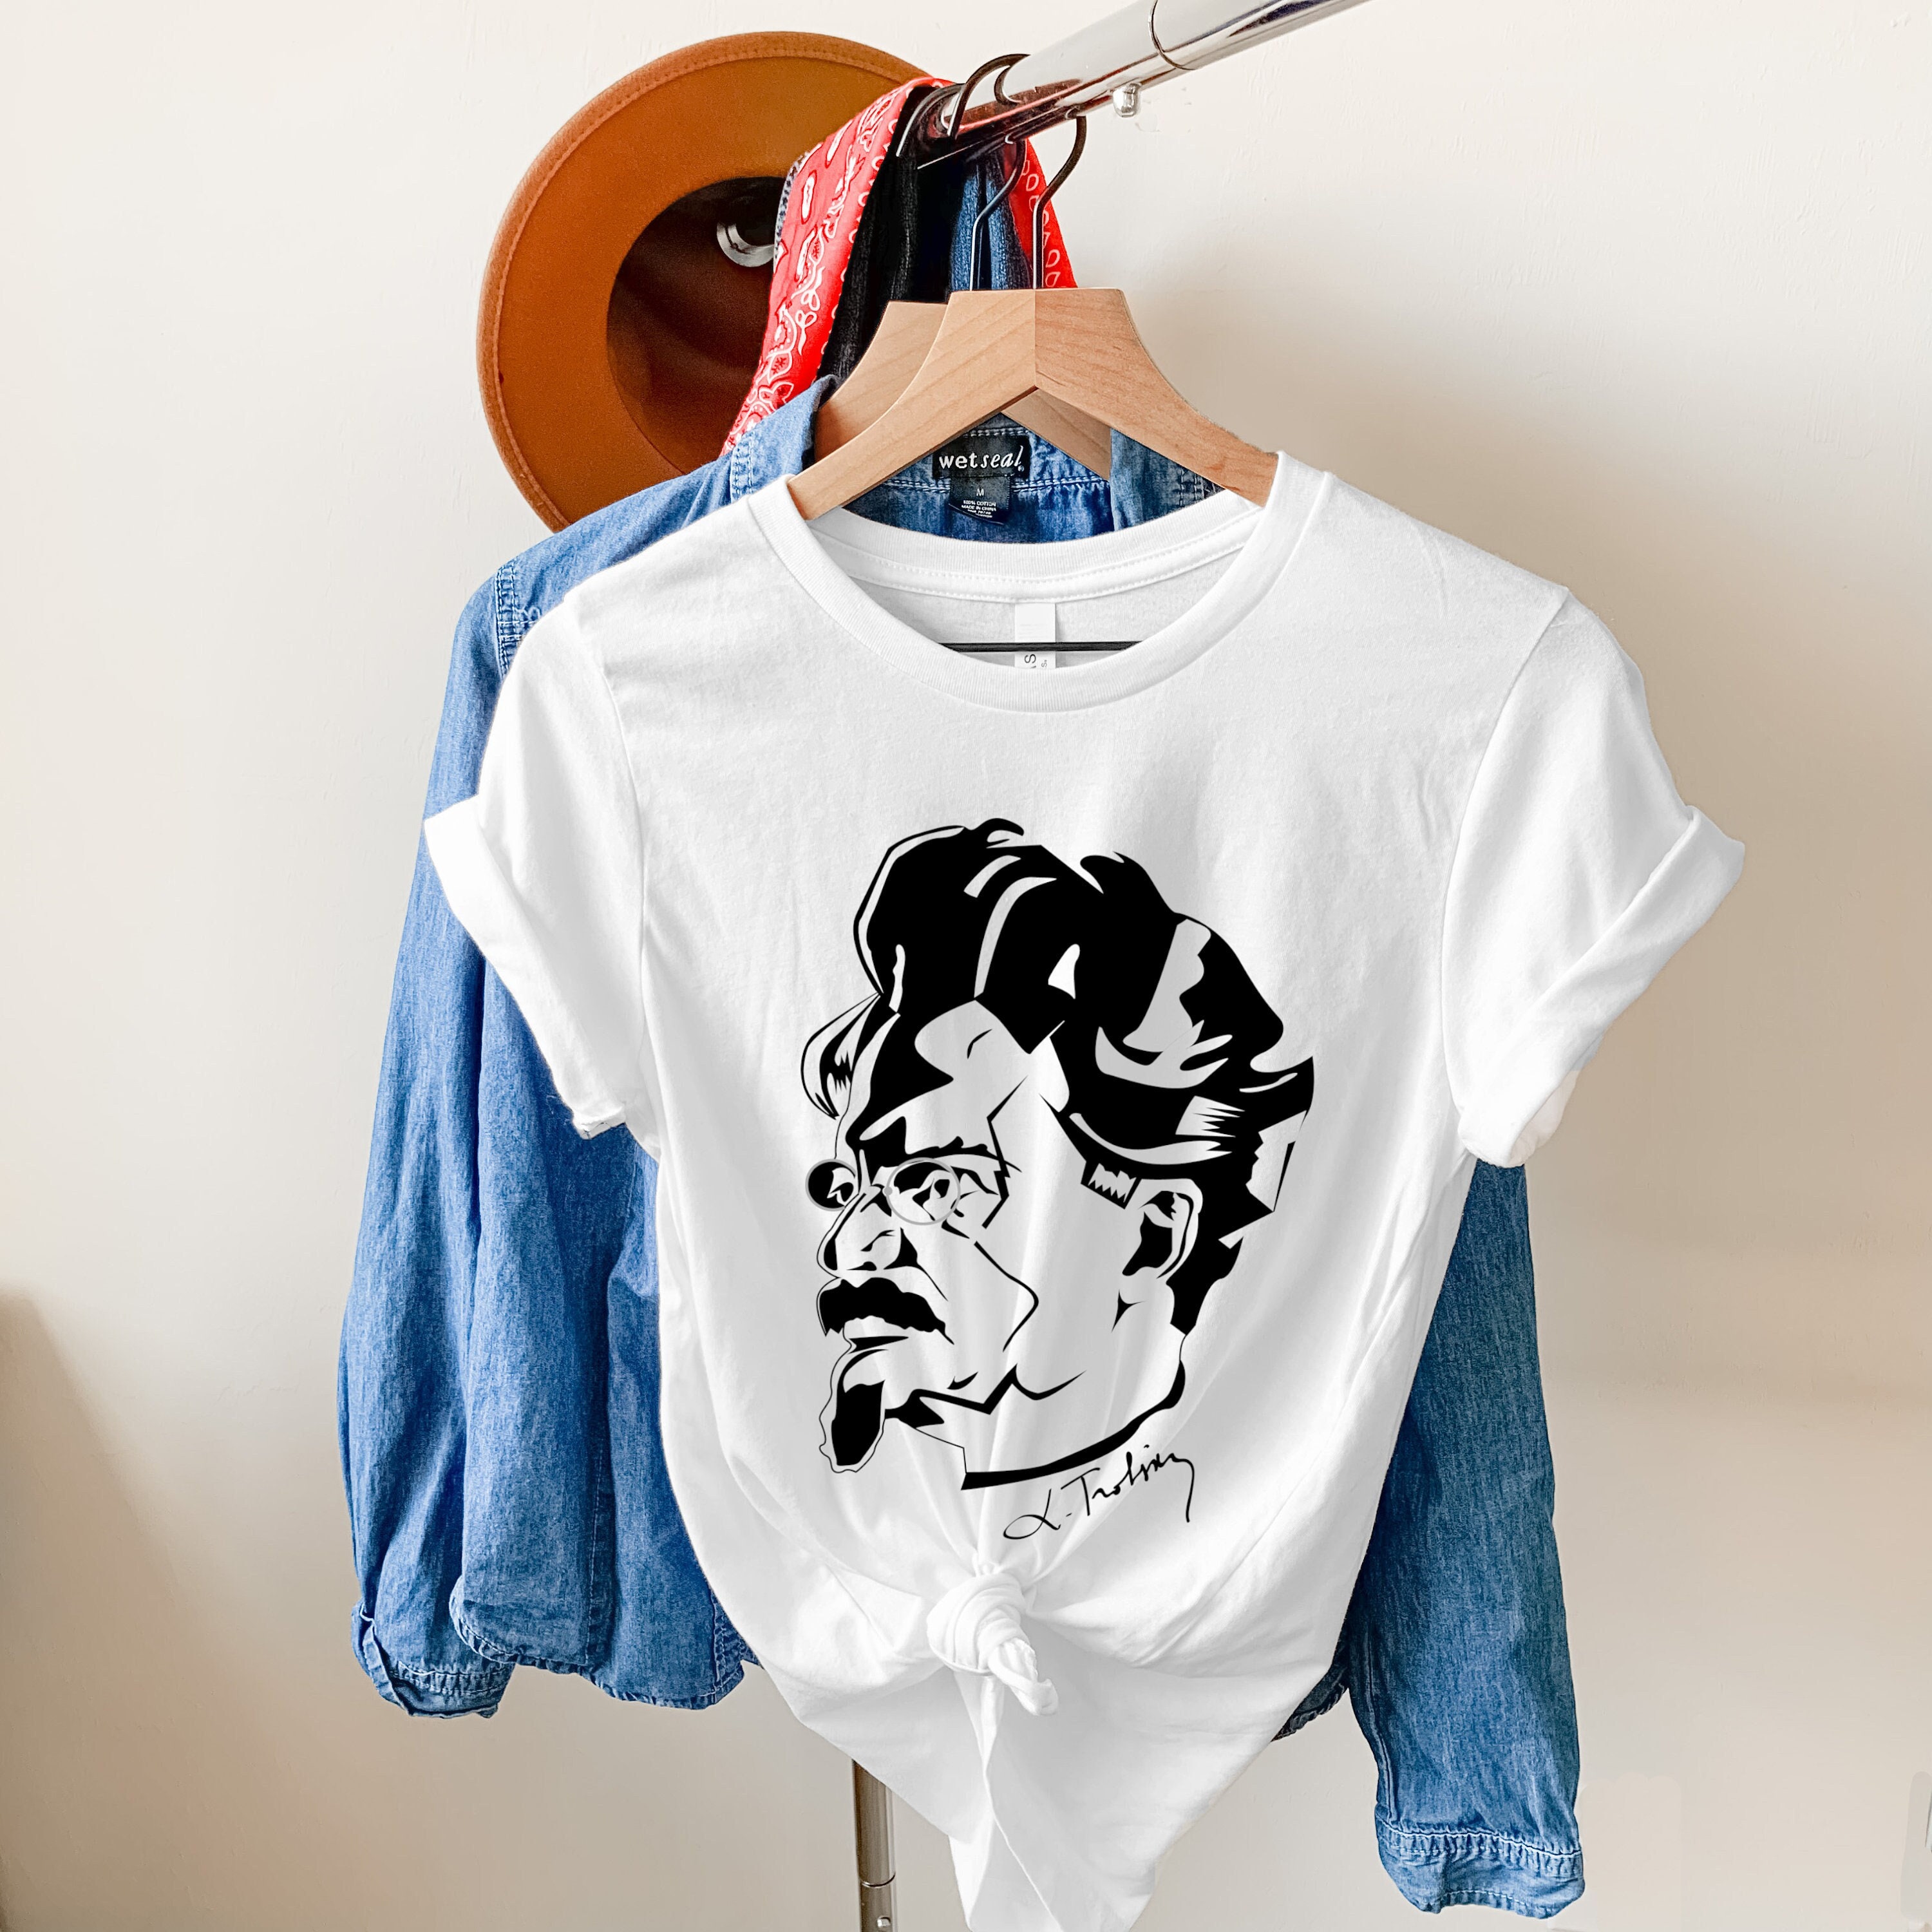 Che Alexandria Ocasio-Cortez Guevara Meme Aoc Feminist Gift T Shirts,  Hoodies, Sweatshirts & Merch